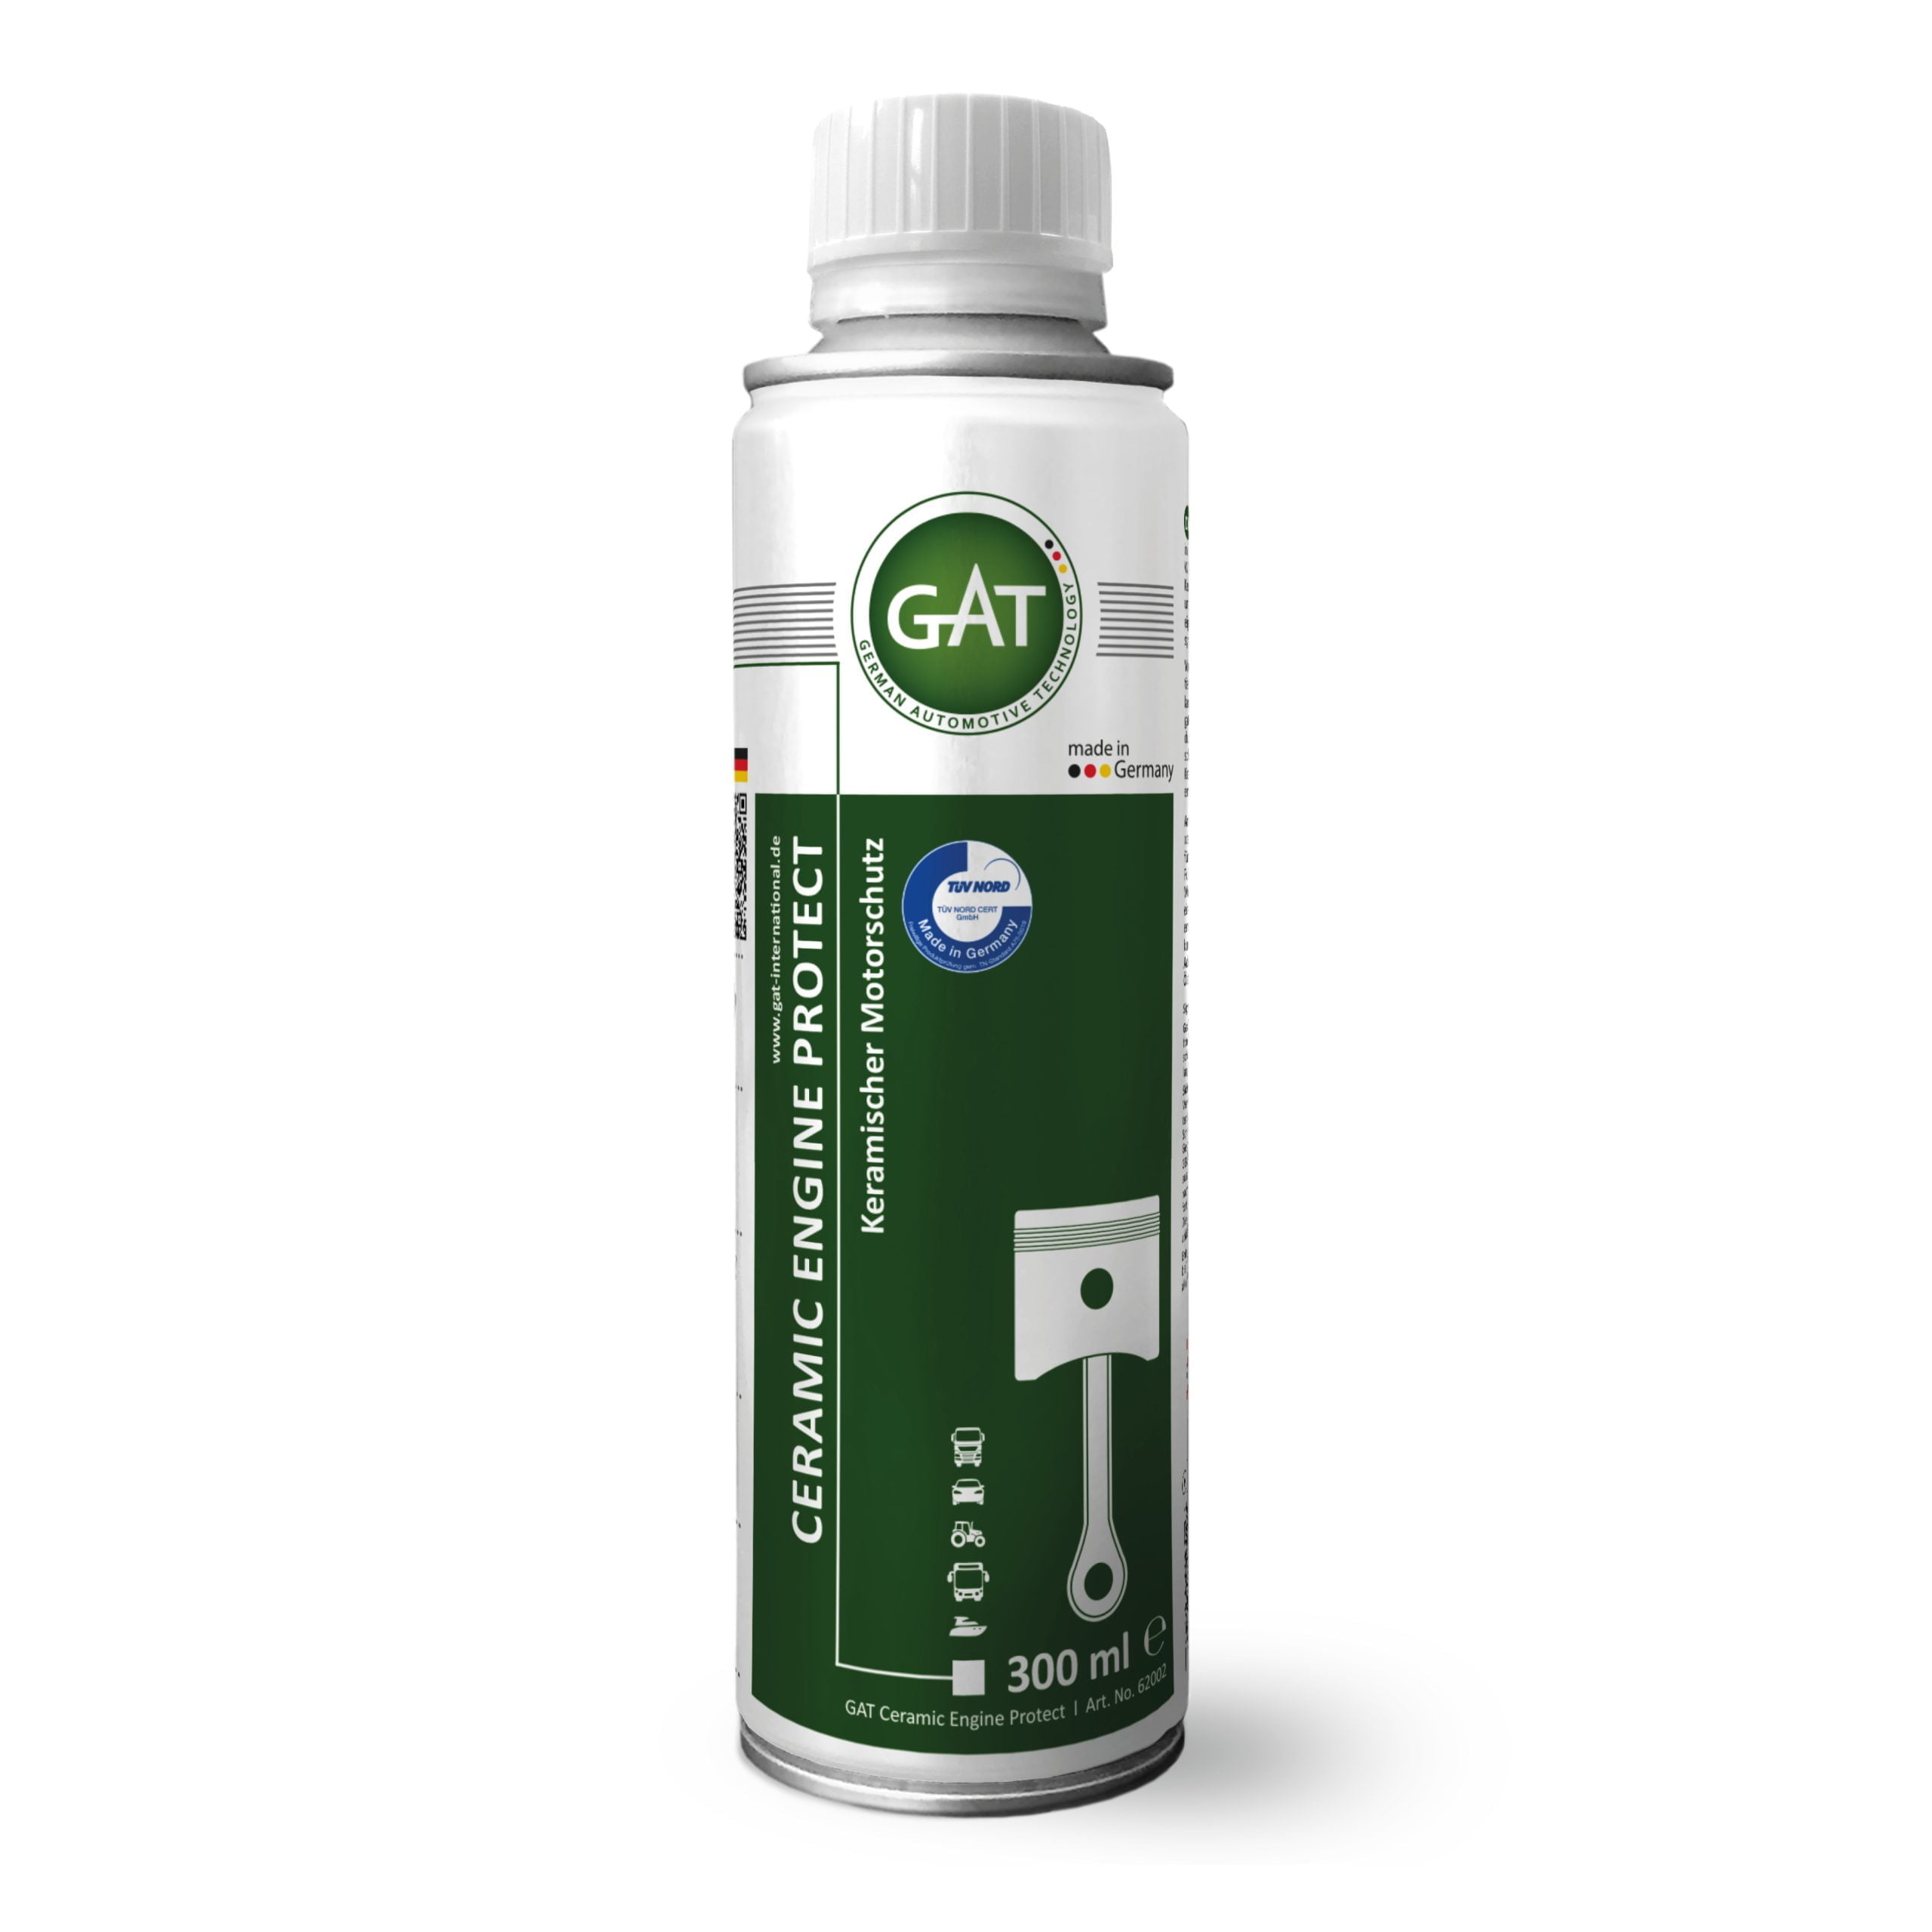 GAT Ceramic Engine Protect - Car Line